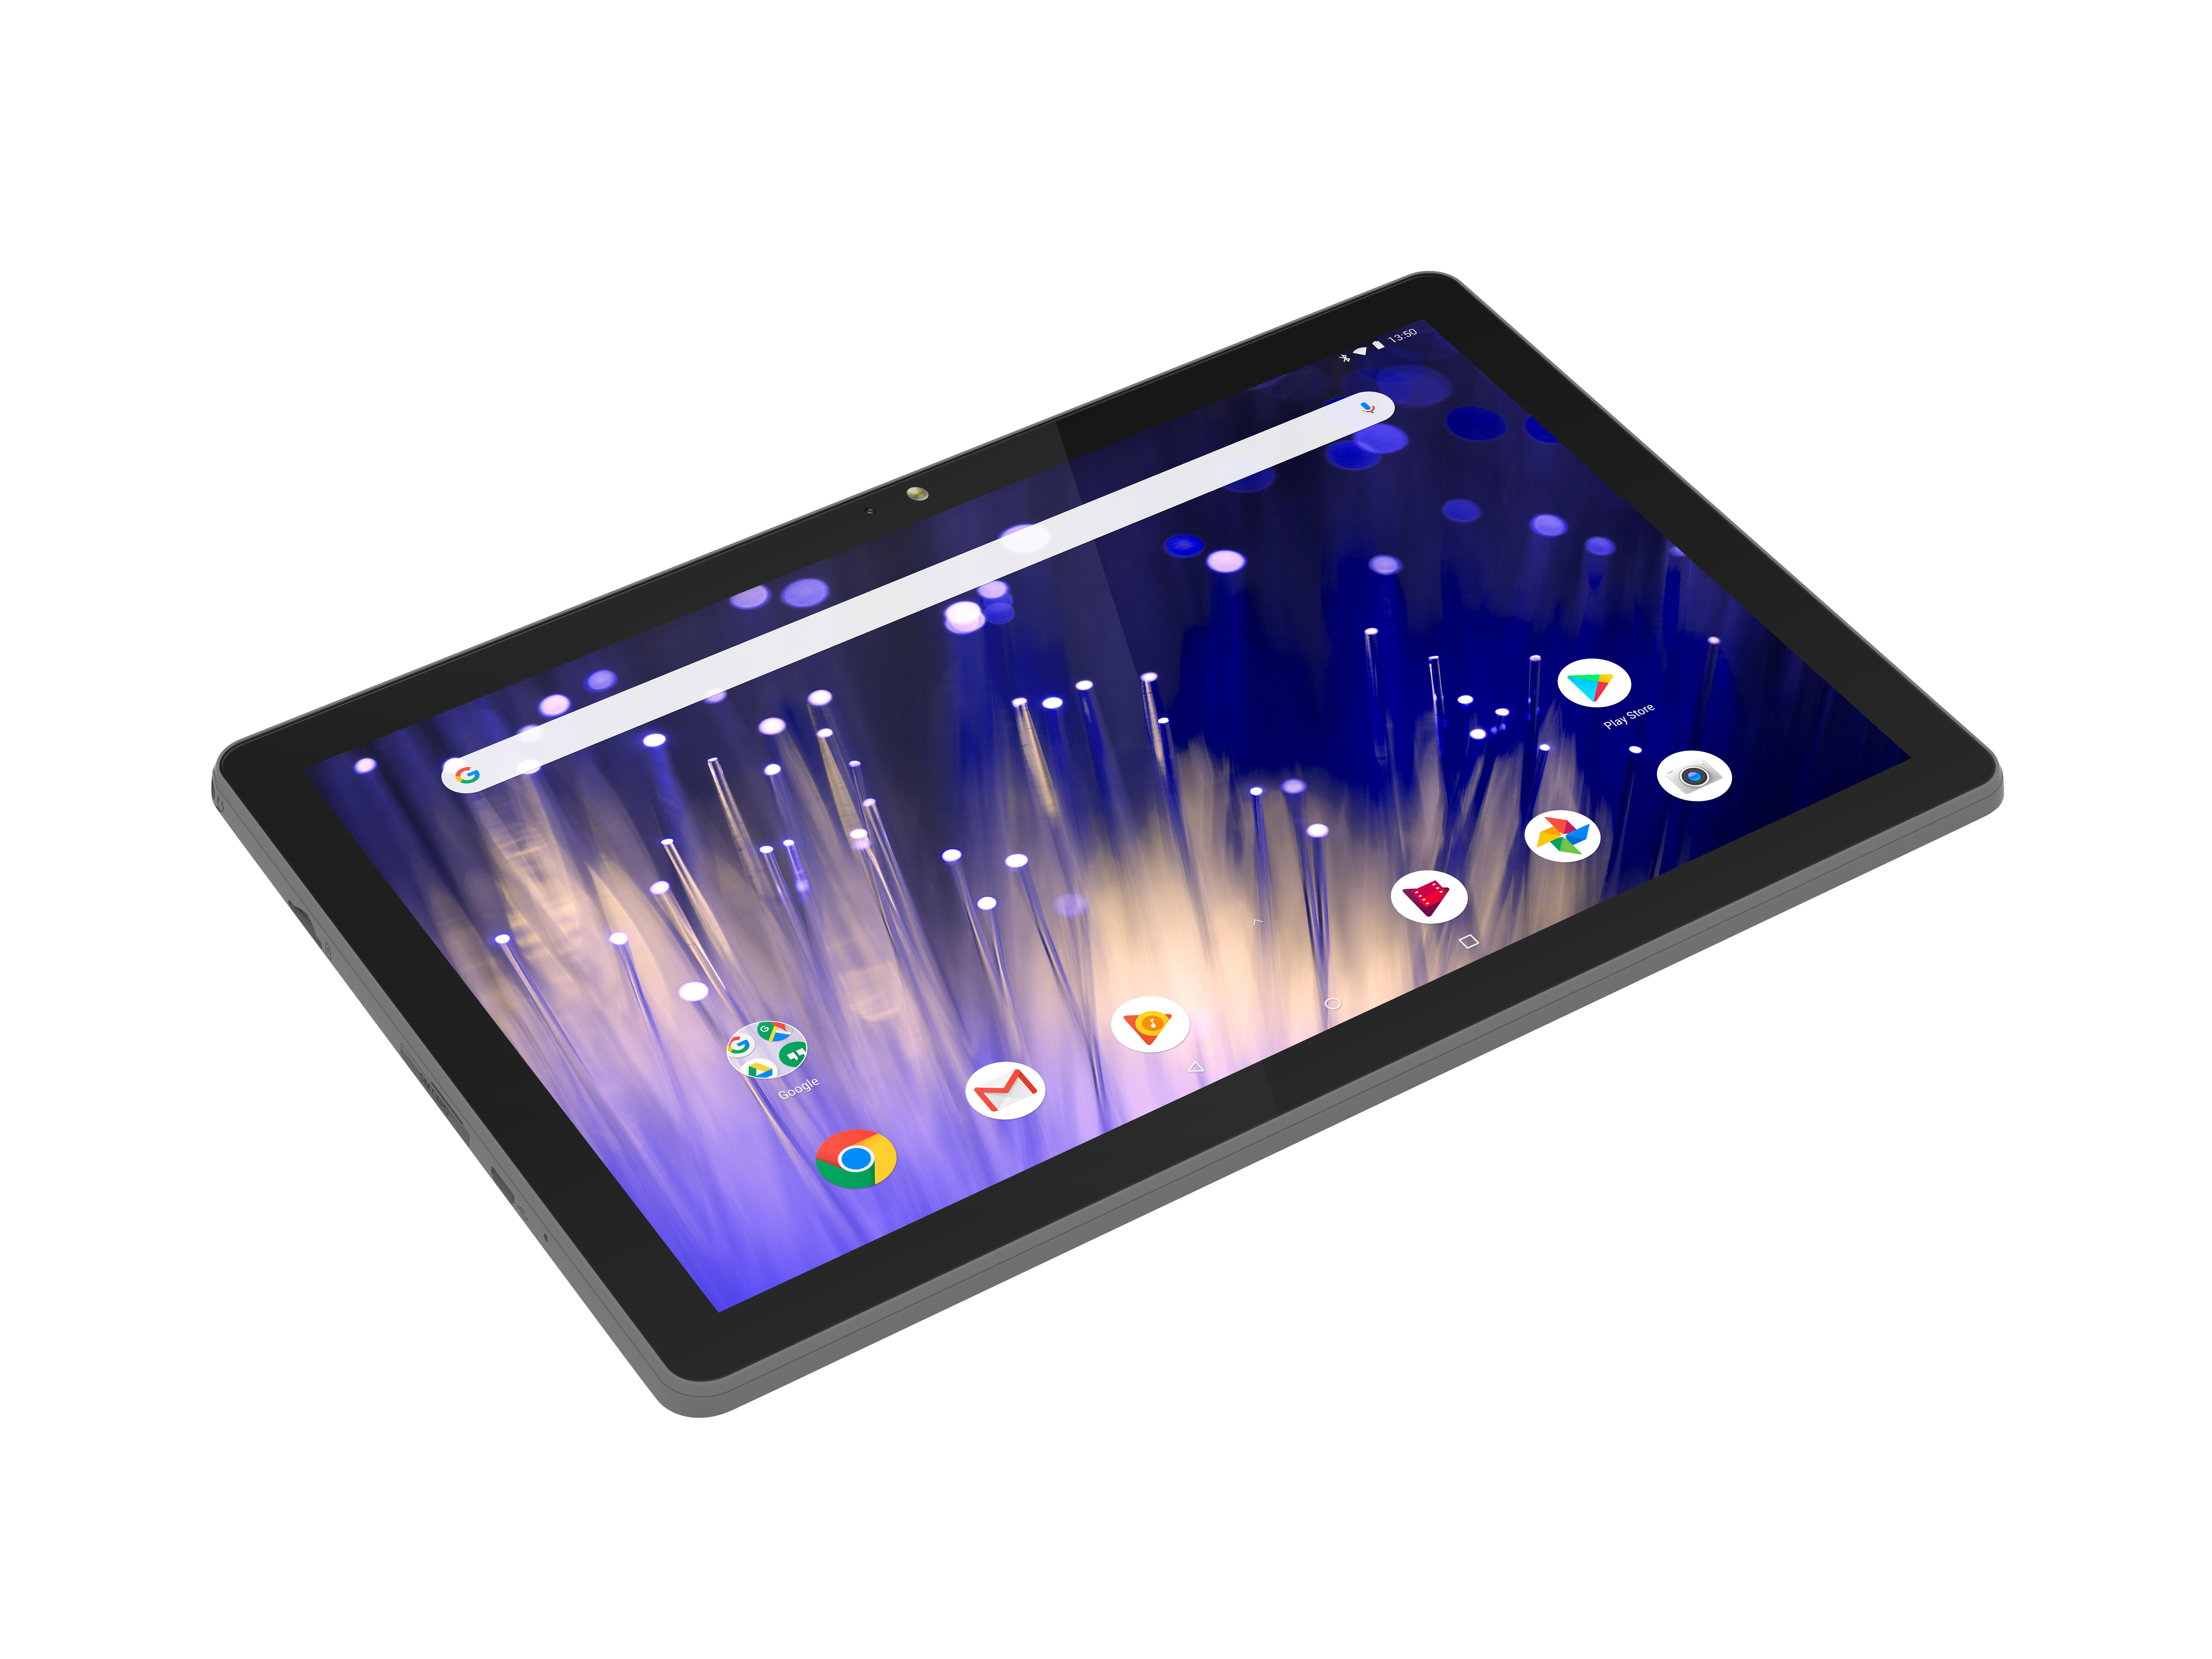 PET GB, Schwarz 32 LTE, 100-LH232V Tablet, Zoll, PEAQ 10,1